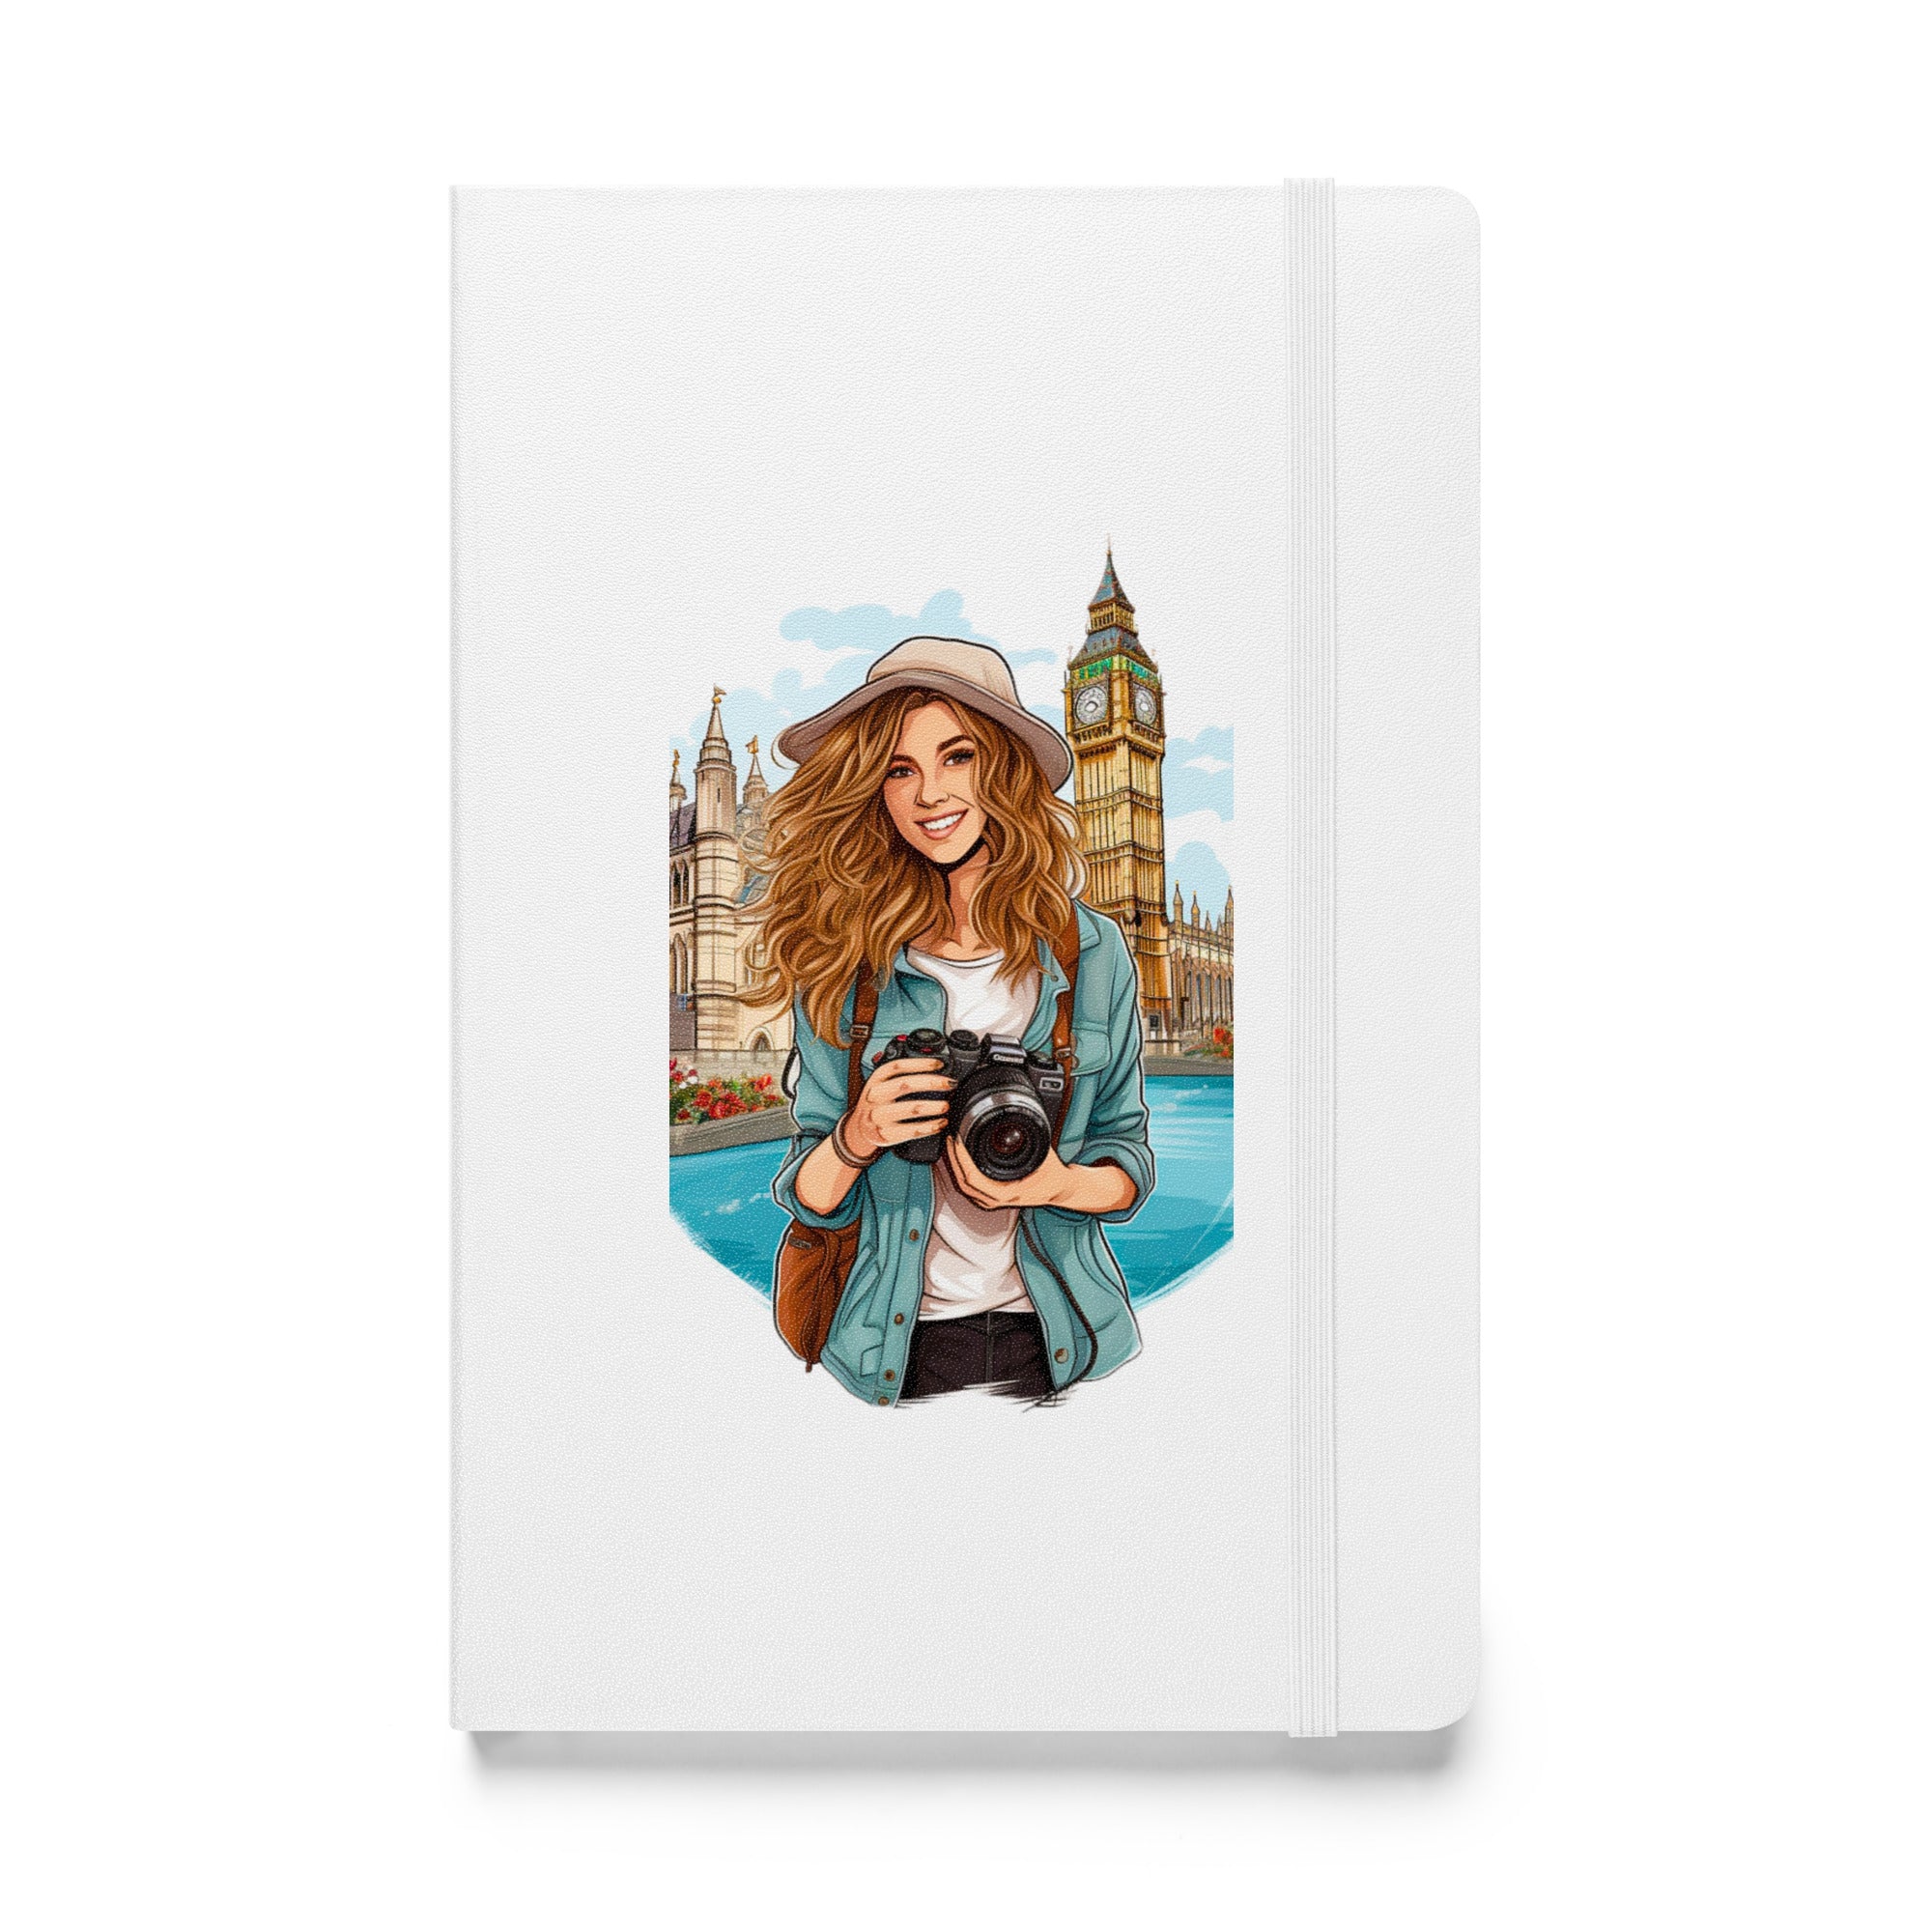 London Travel Photographer - Hardcover Notebook